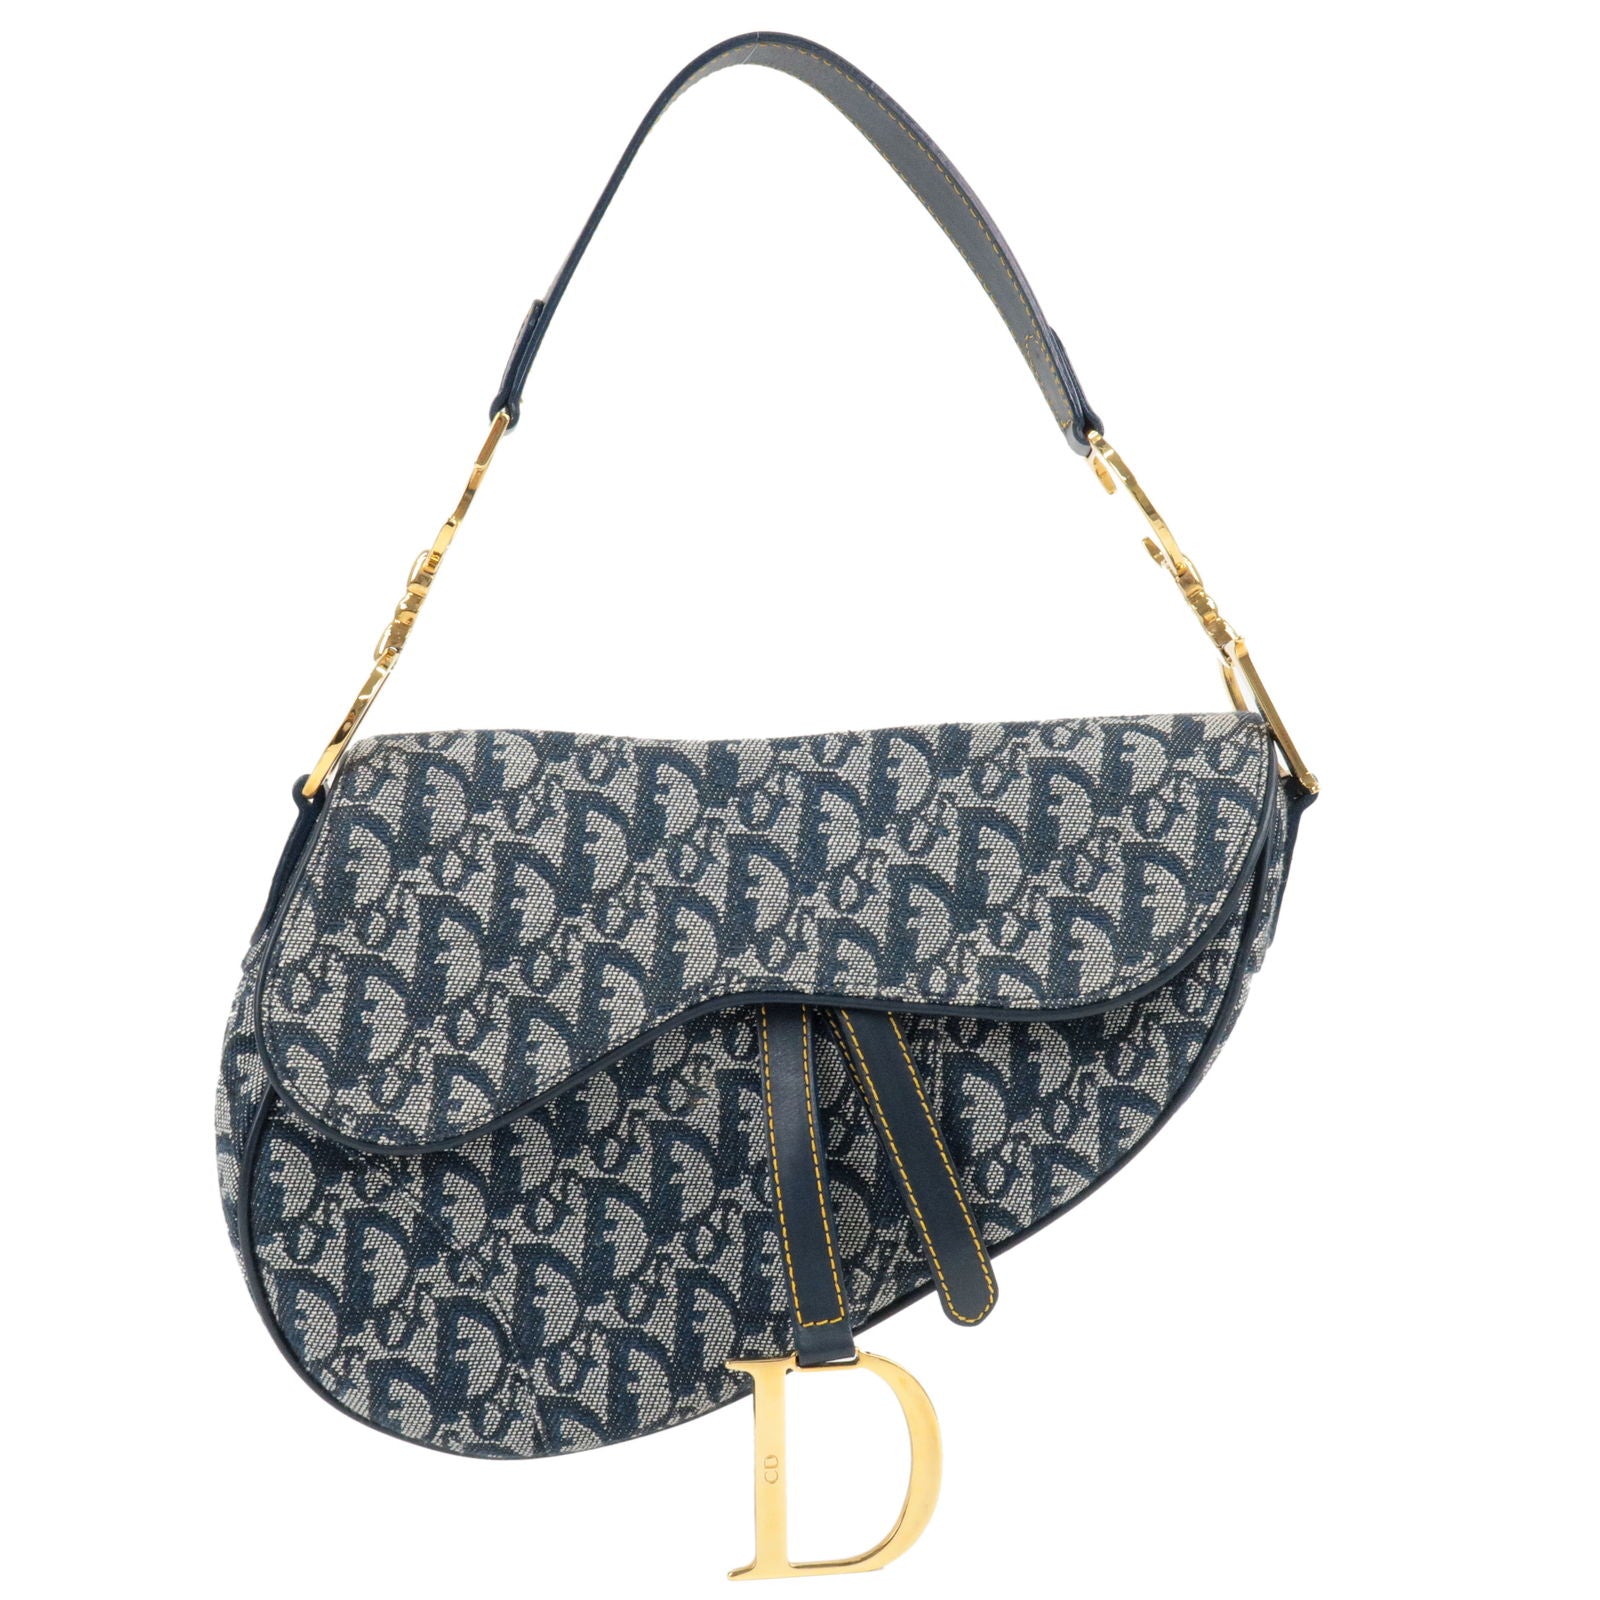 New Authentic Christian Dior Trotter Saddle Bag in Denim logo